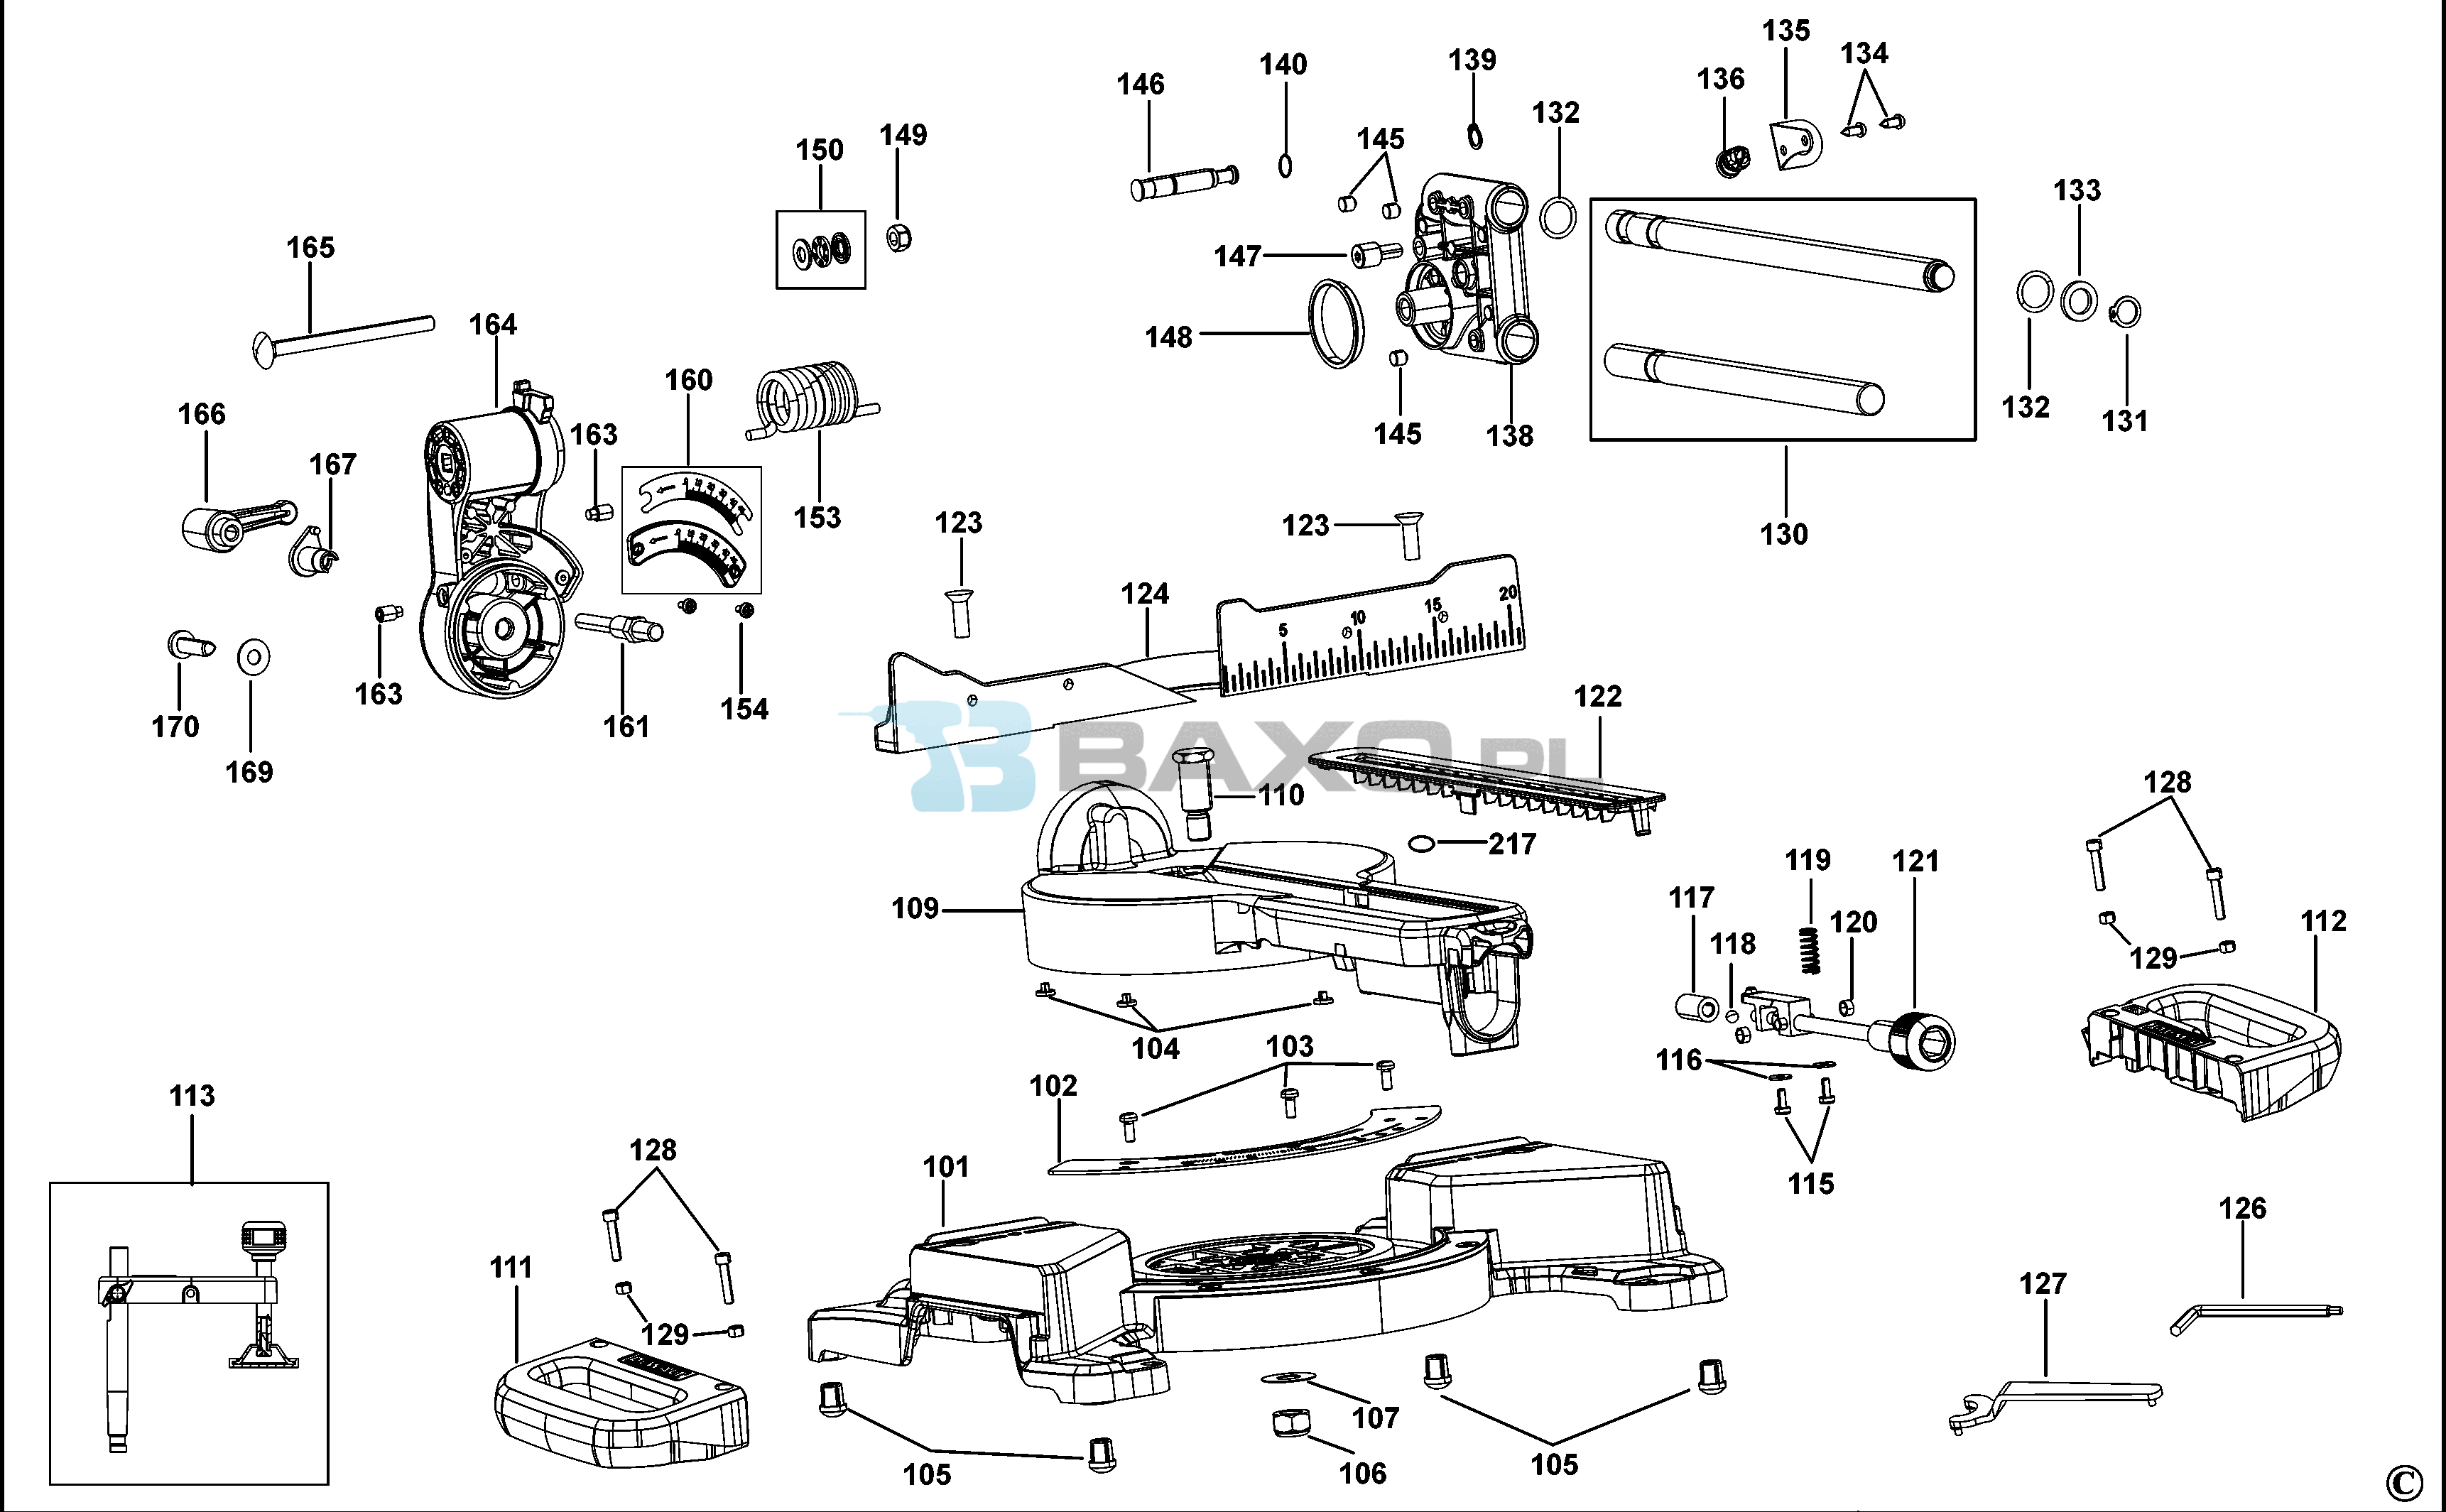 Black & Decker RO600 Type 1 Parts Diagram for Sander